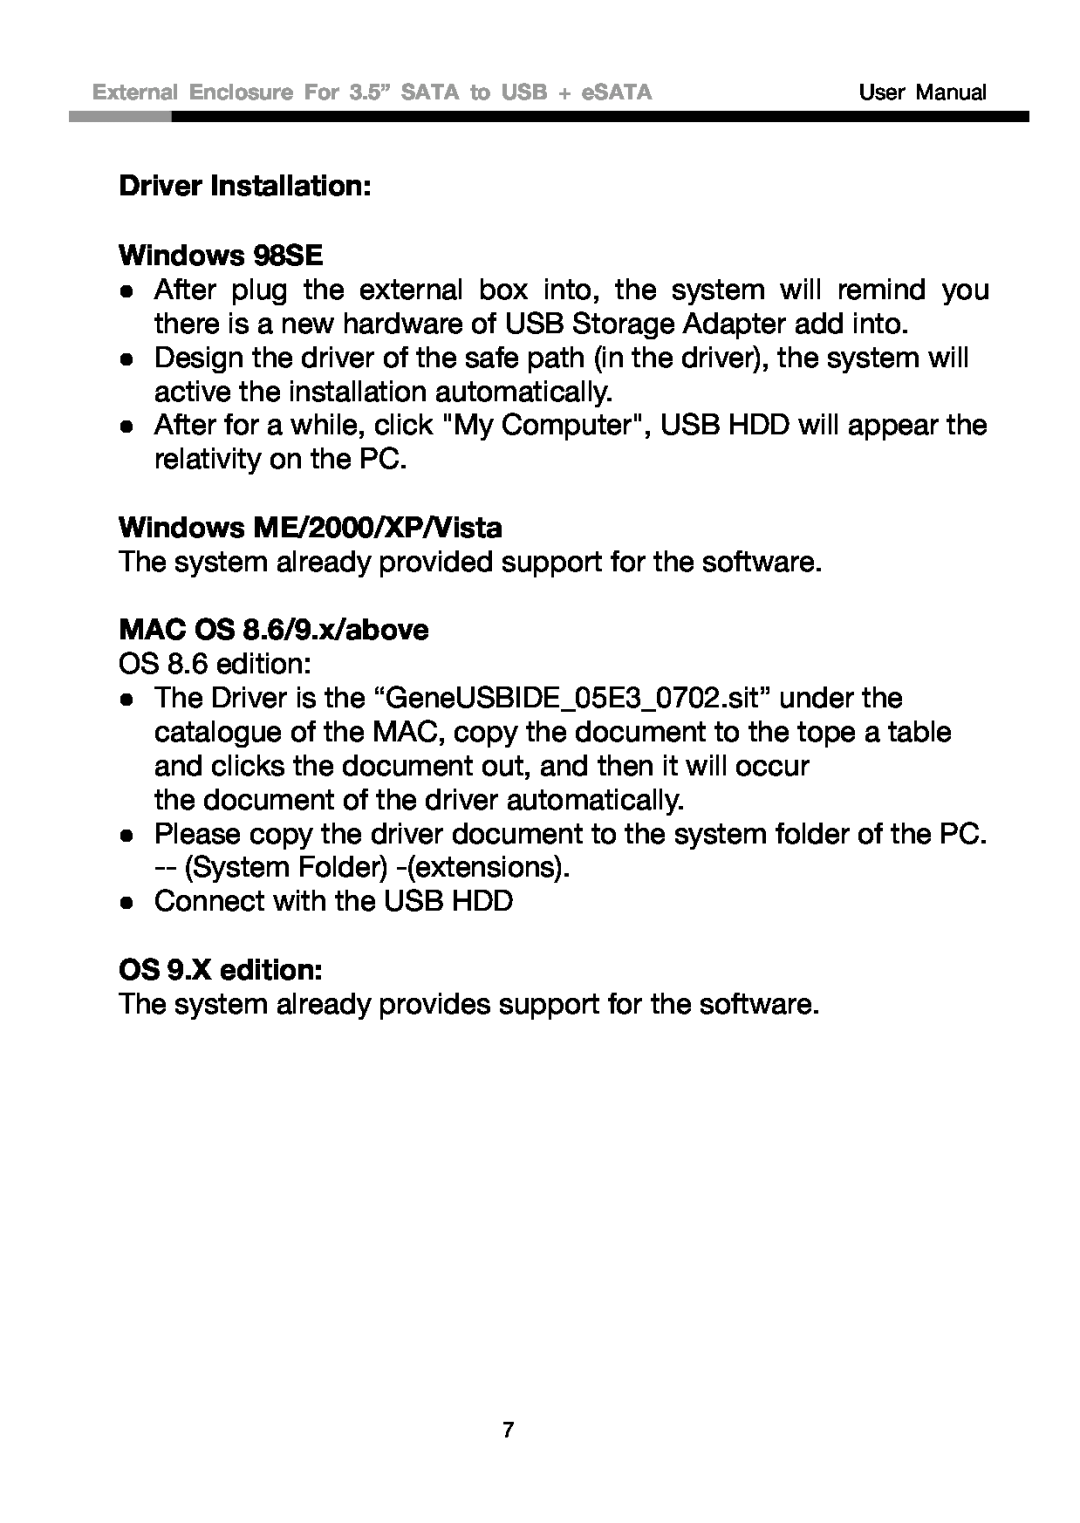 Rosewill RX81US-HT35B-BLK Driver Installation Windows 98SE, Windows ME/2000/XP/Vista, MAC OS 8.6/9.x/above, OS 9.X edition 